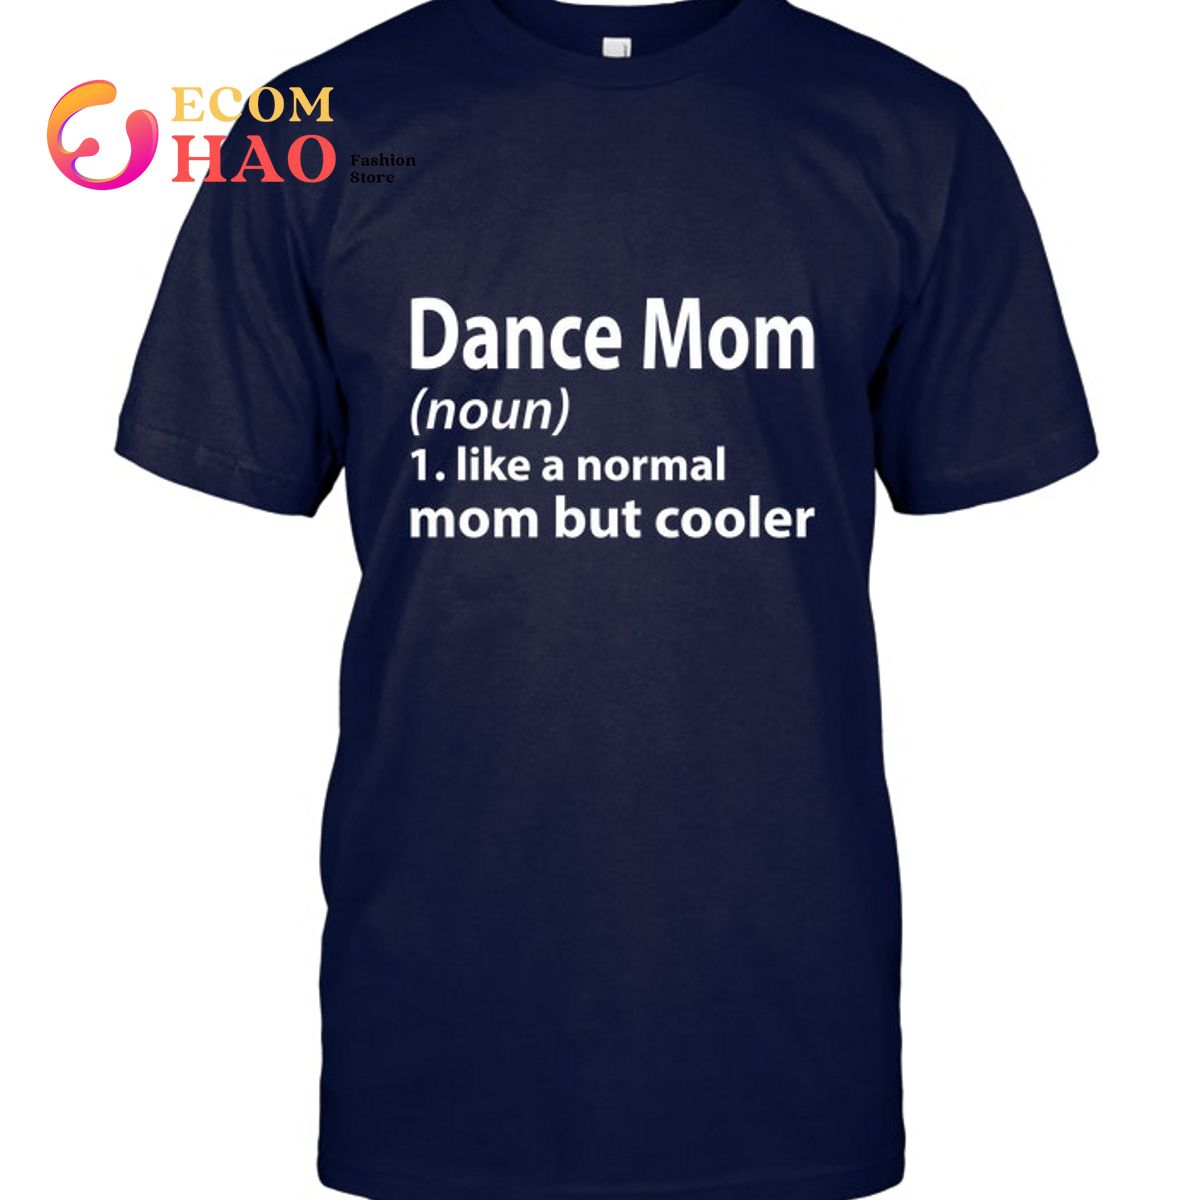 Dance Mom Definition T-Shirt